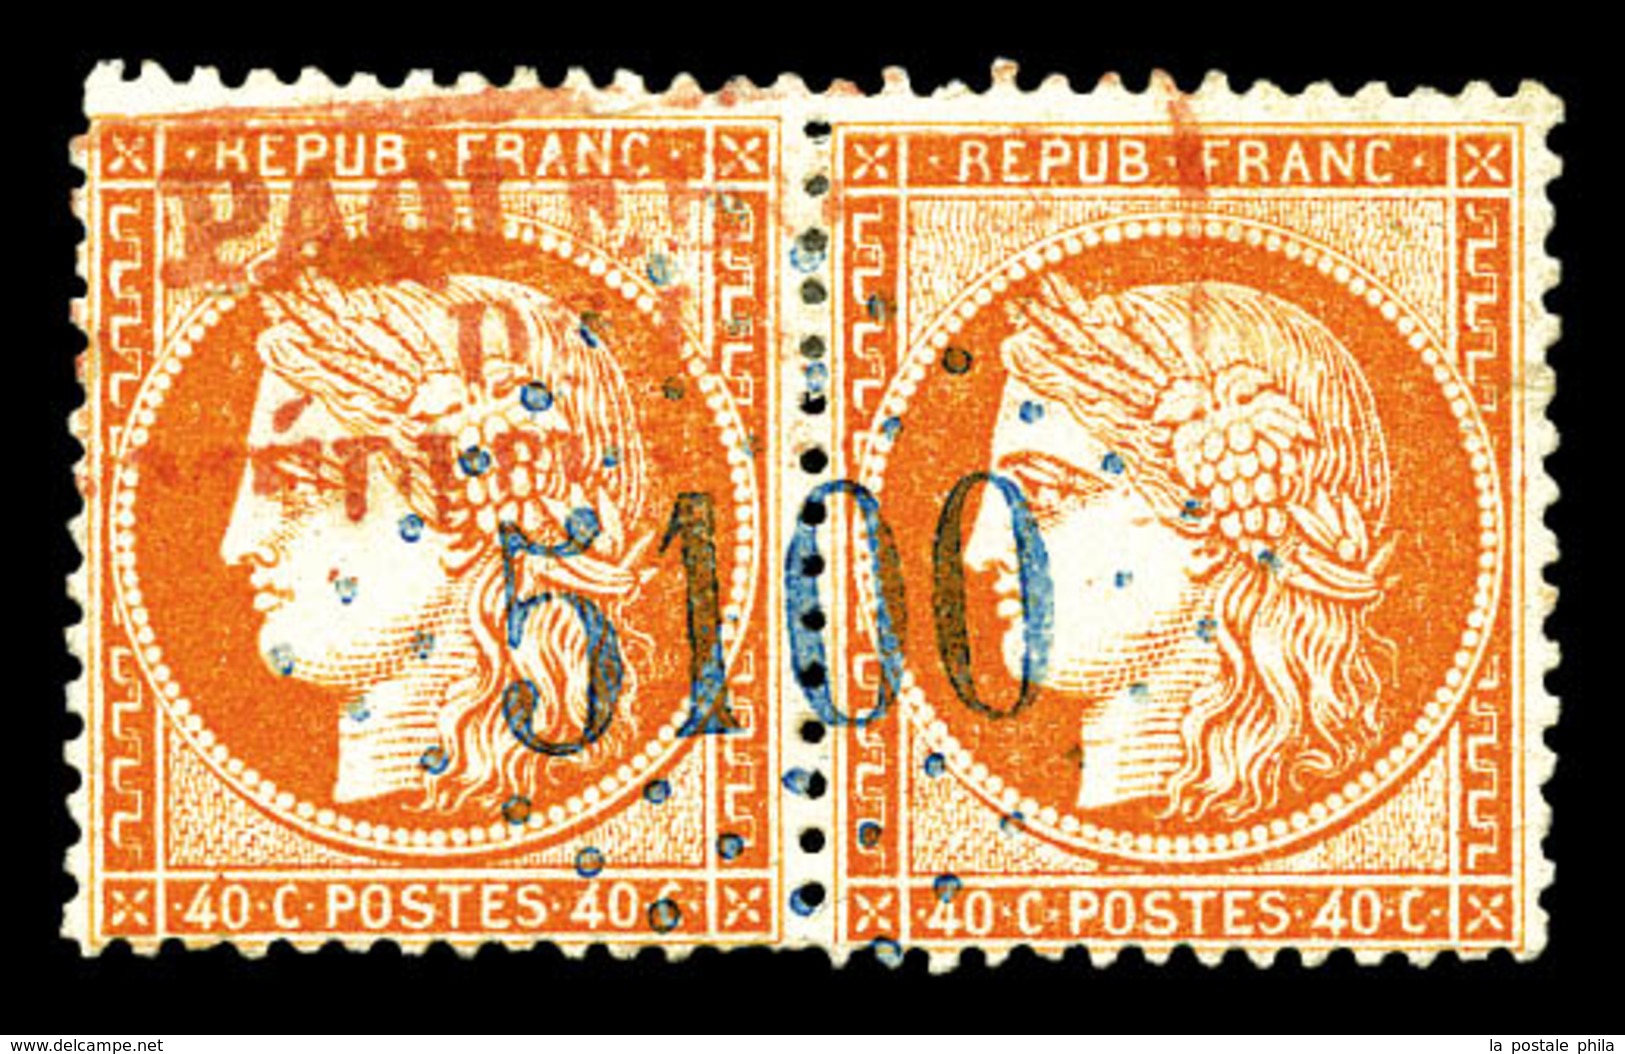 O Trebizonde, N°38, Siège, Paire De 40c Orange Obl GC '5100' De Trebizonde En Bleu. SUP (signé Calves)   Qualité: O   Co - 1849-1876: Periodo Classico